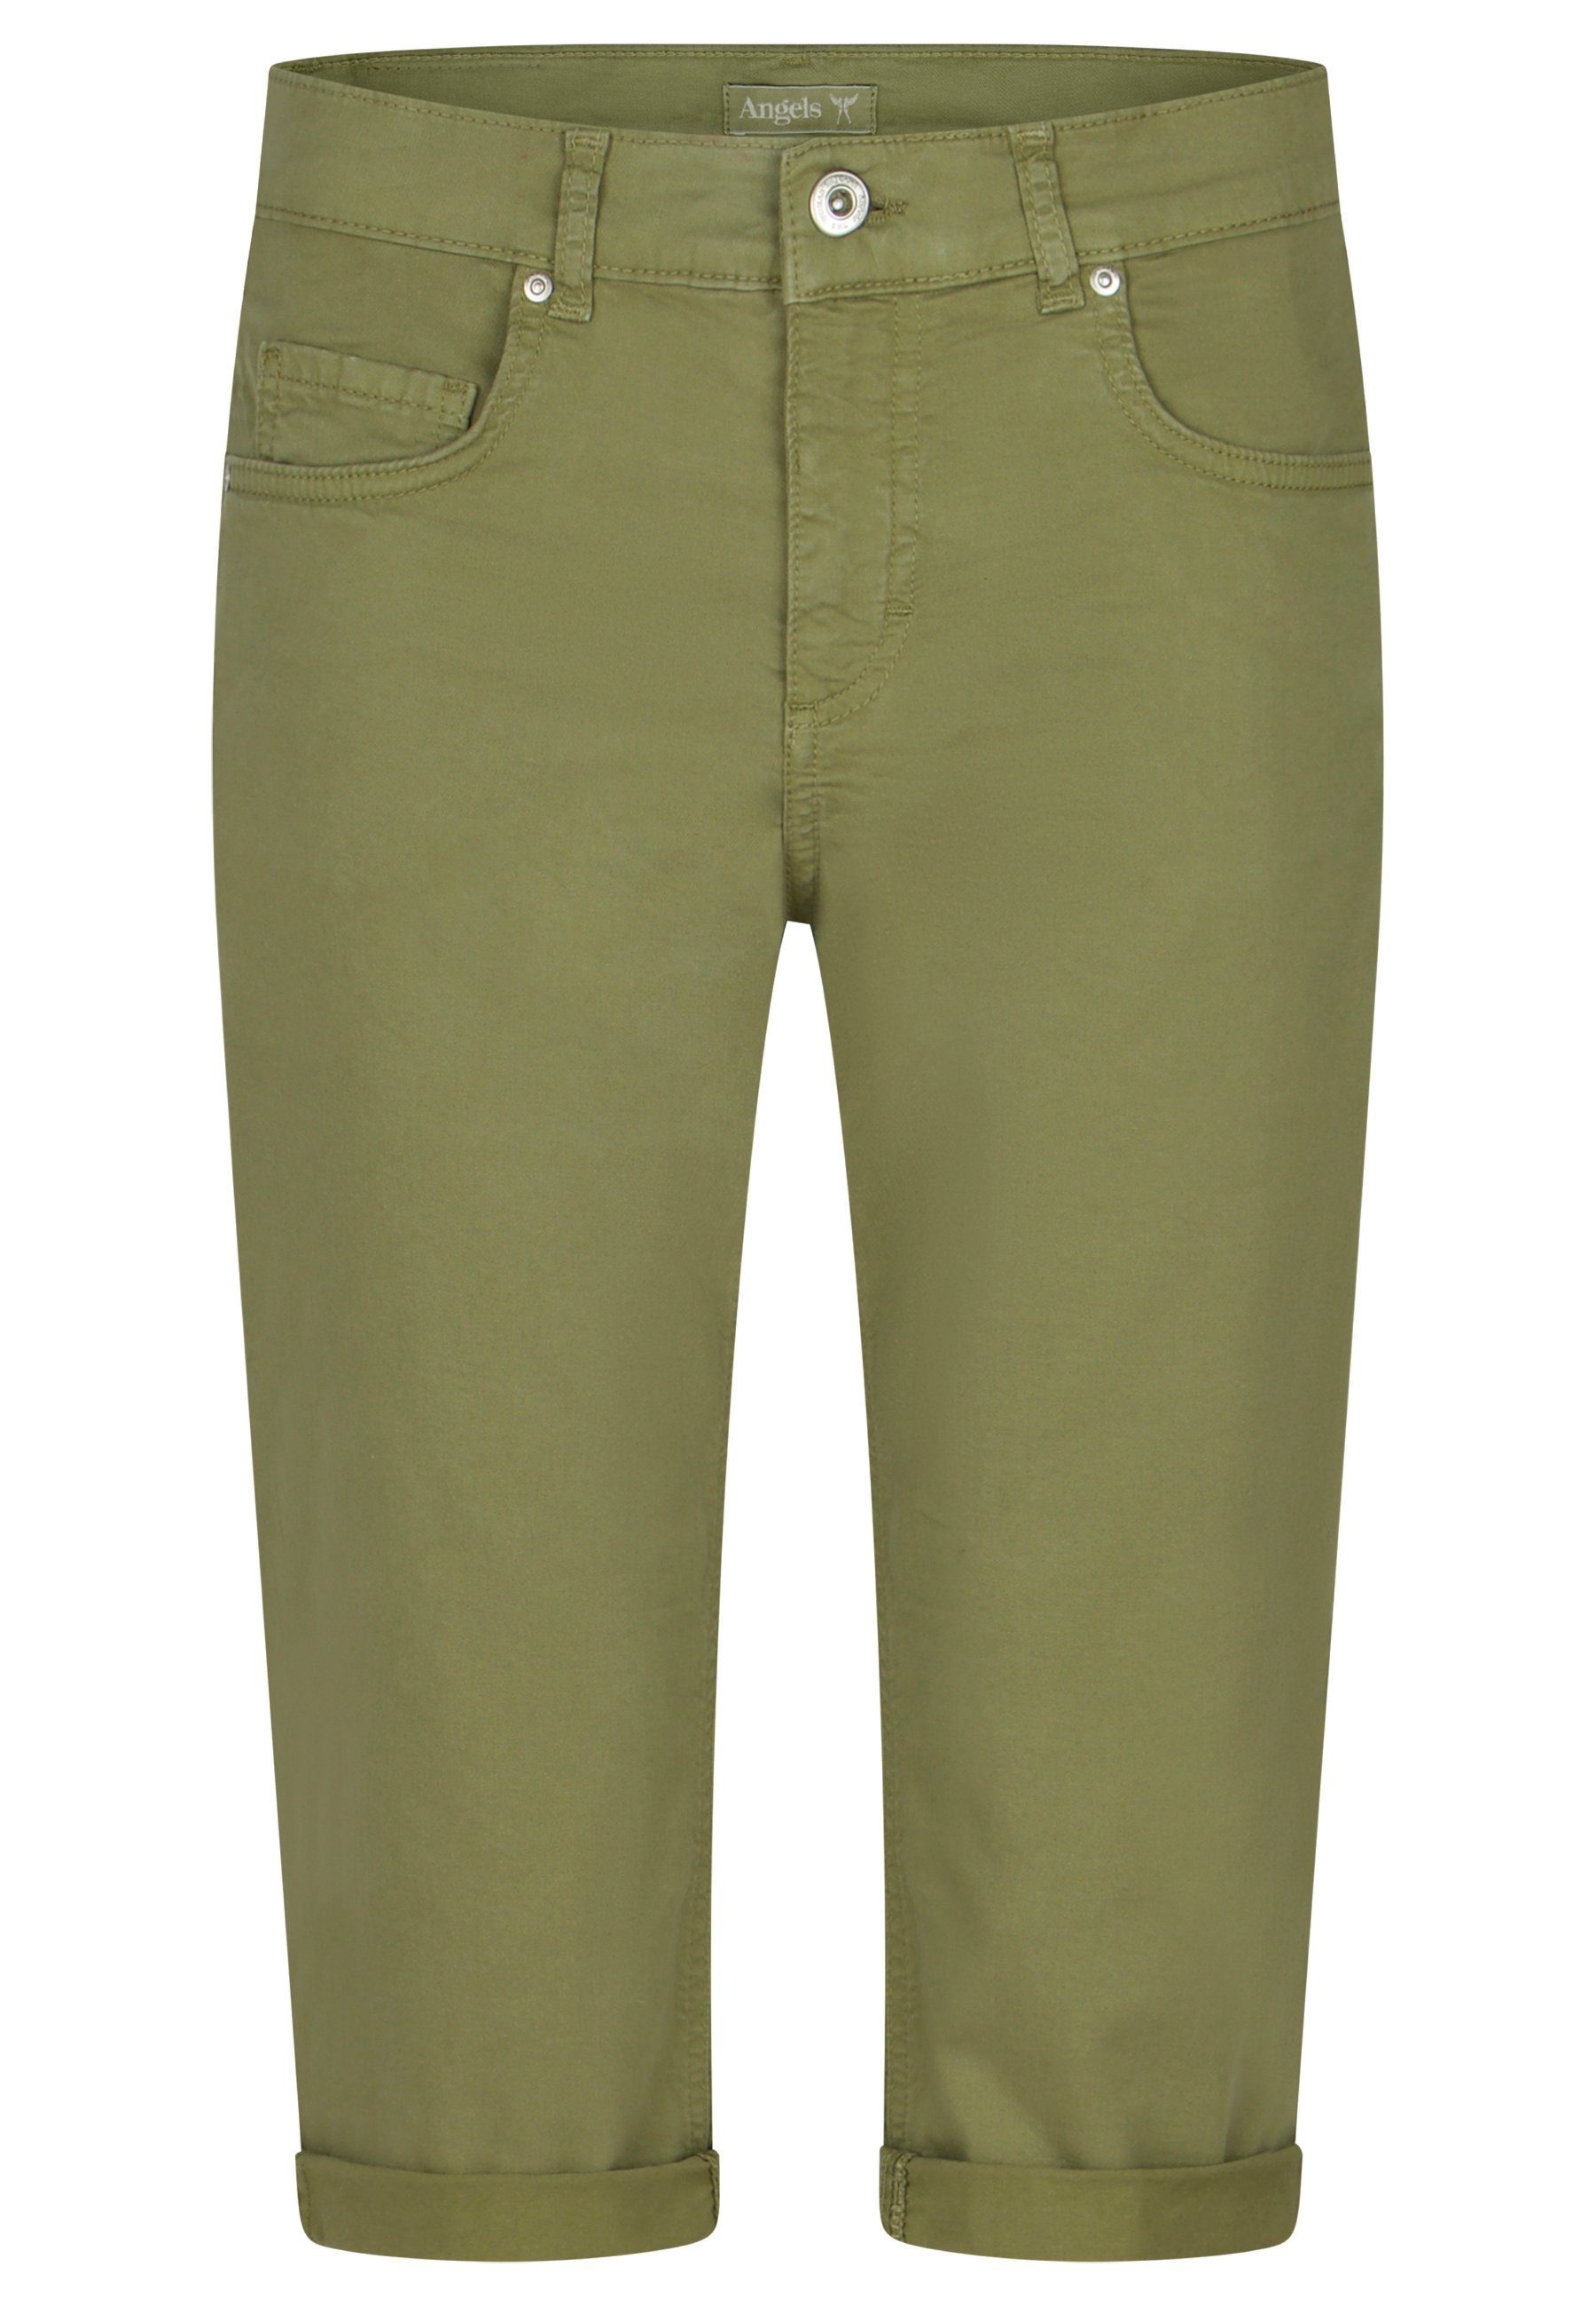 ANGELS Slim-fit-Jeans 5-Pocket-Hose Capri khaki TU Label-Applikationen mit